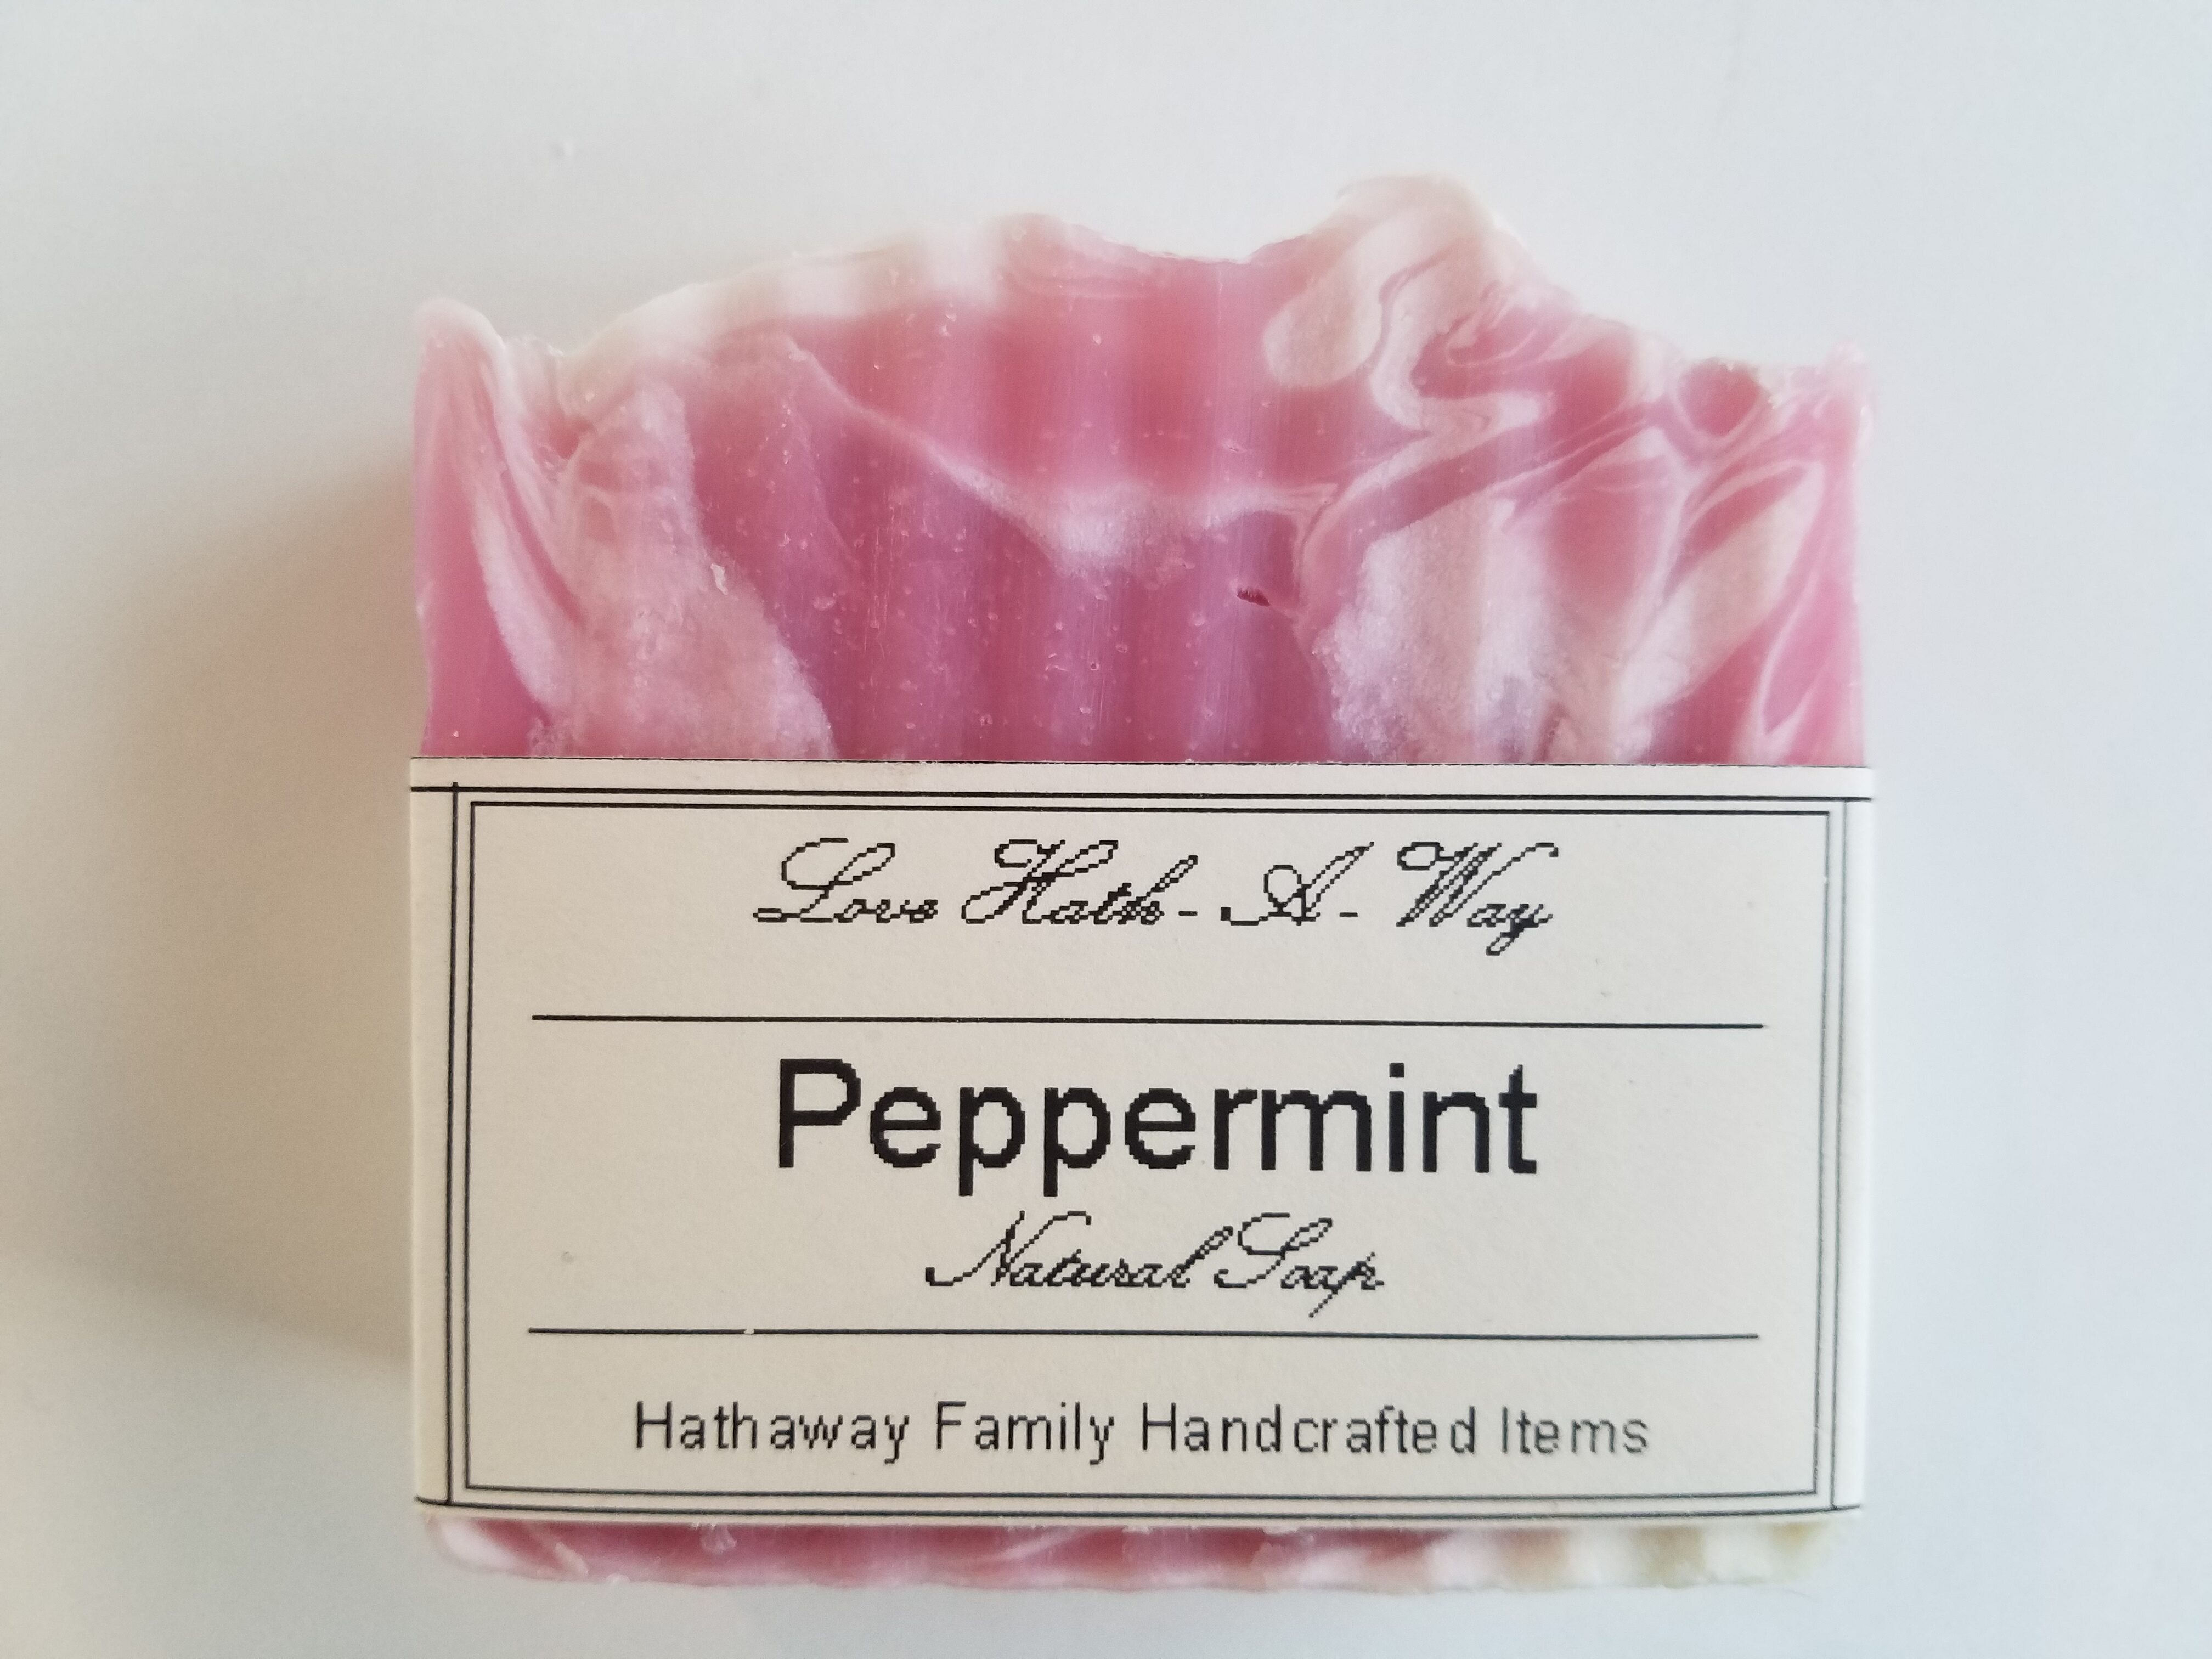 Peppermint Soap